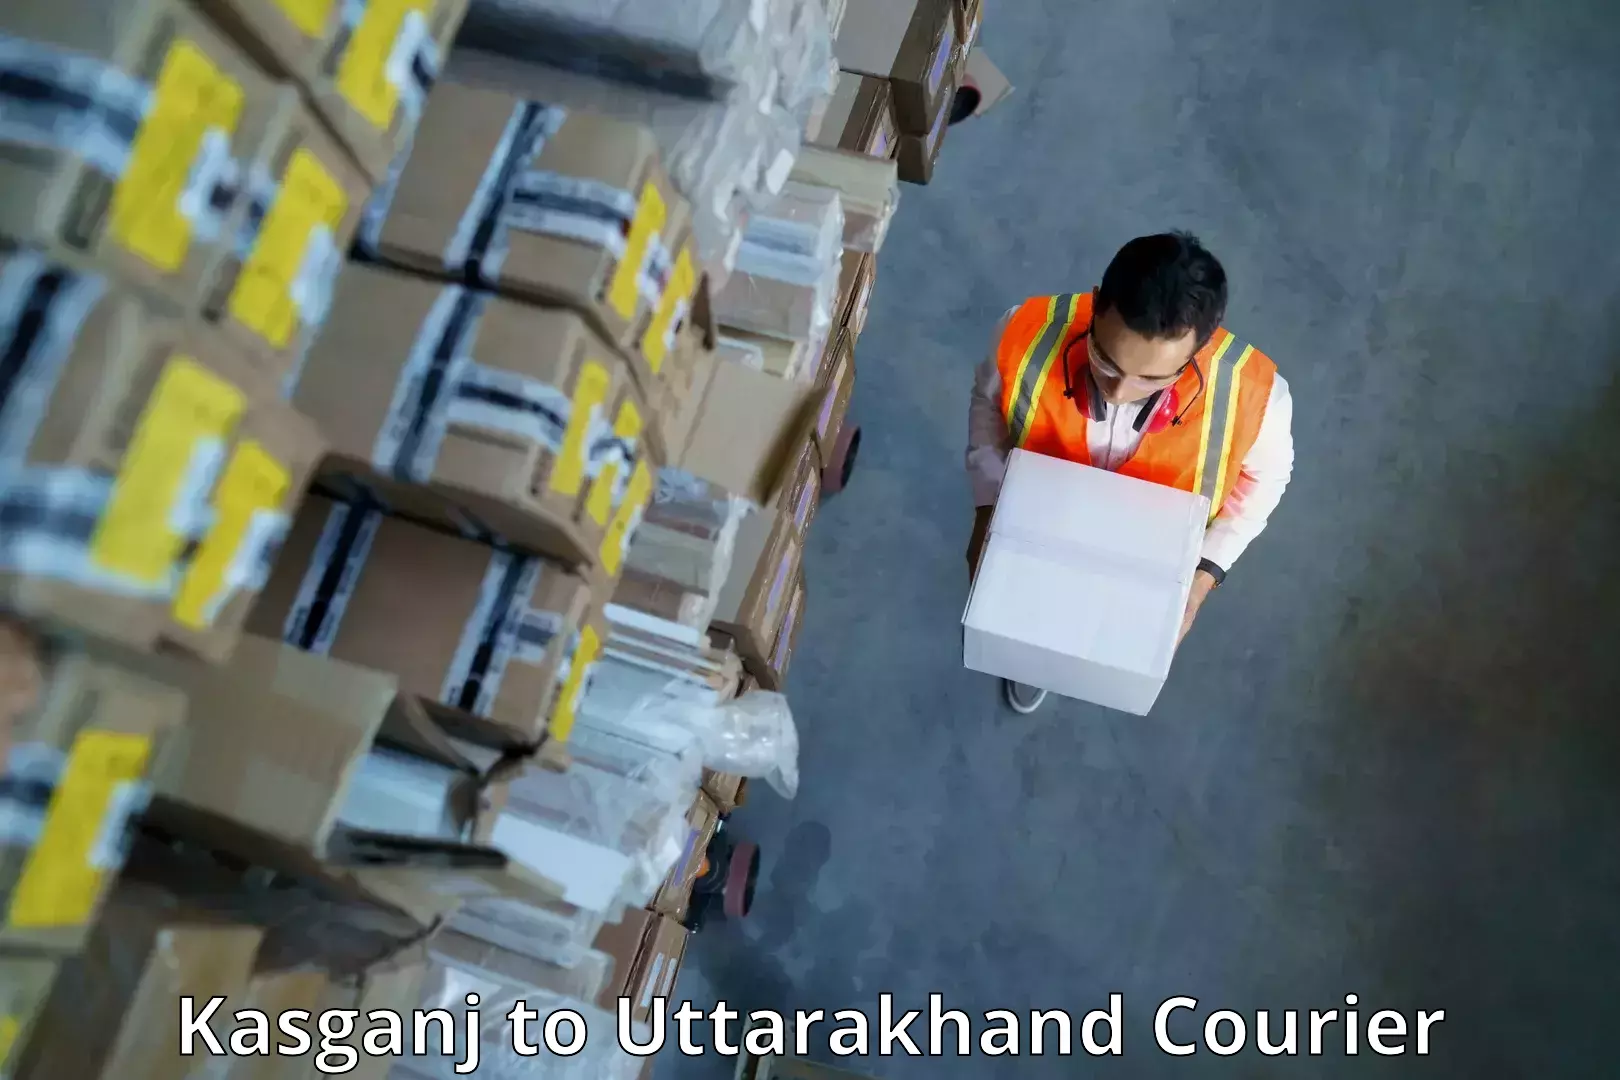 Reliable delivery network Kasganj to Kotdwara